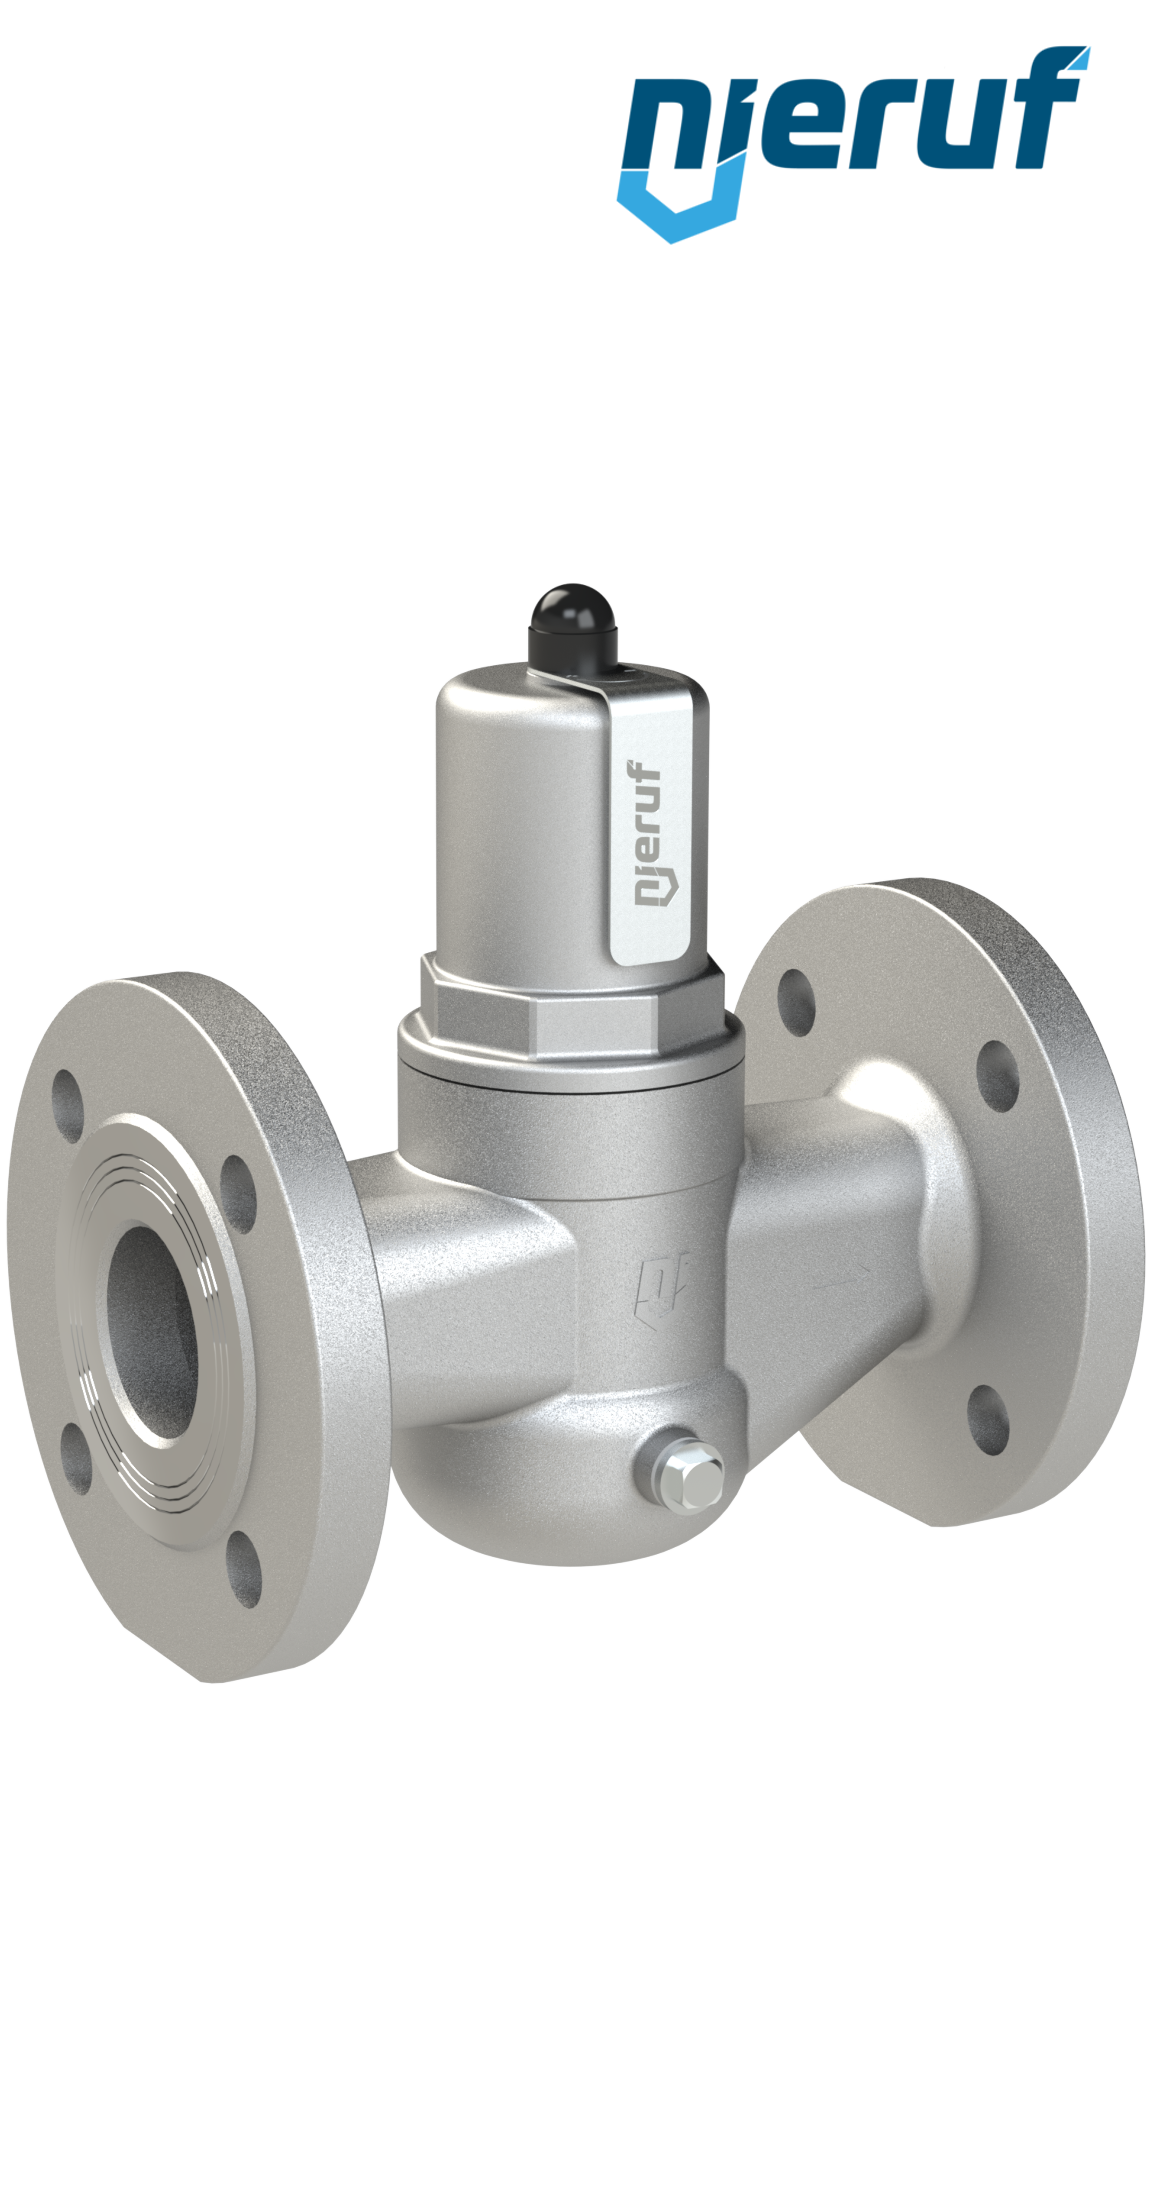 Flange-pressure reducing valve DN 40 PN40 DM07 stainless steel EPDM 5.0 - 15.0 bar